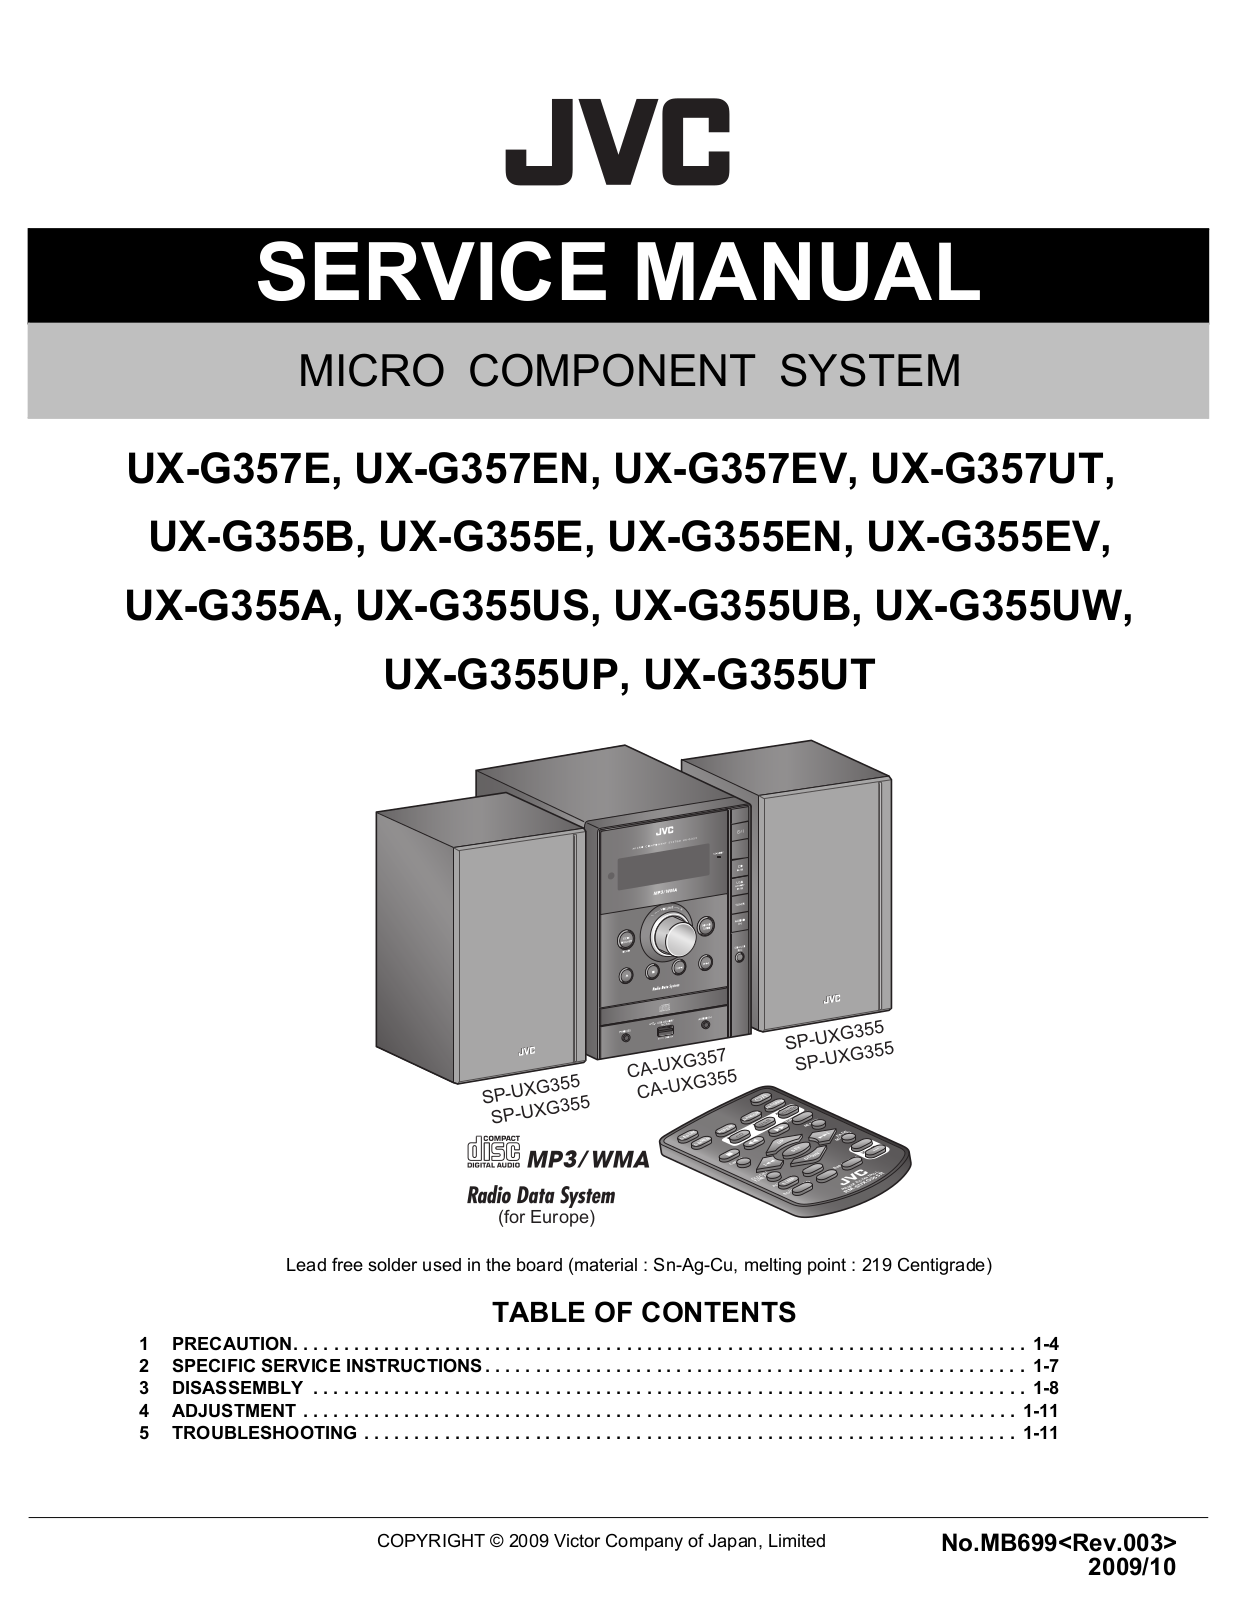 Jvc UX-G357, UX-G355 Service Manual